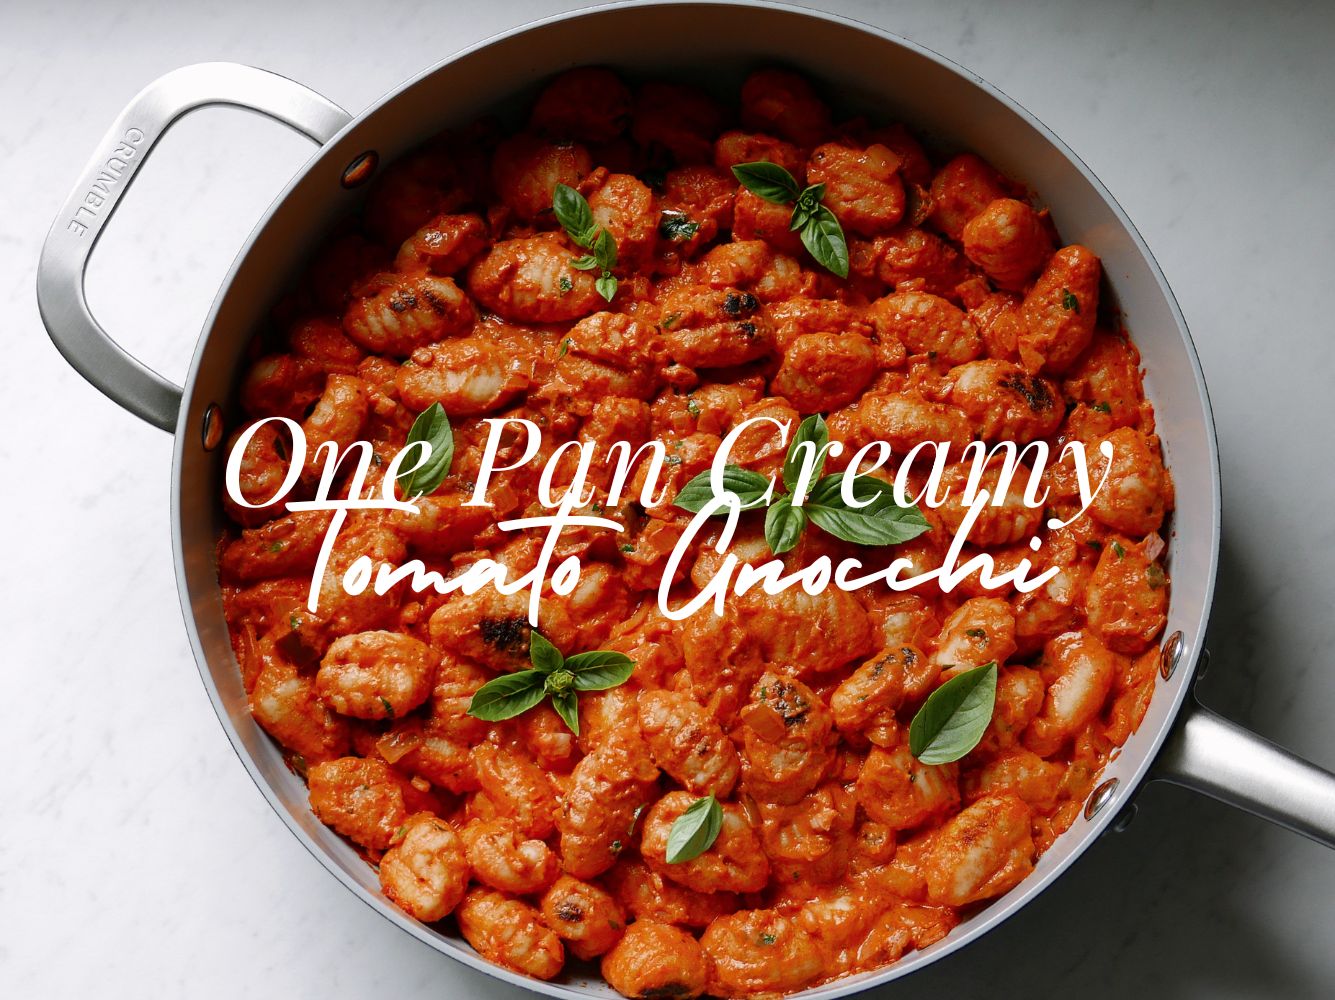 One Pan Creamy Tomato Gnocchi